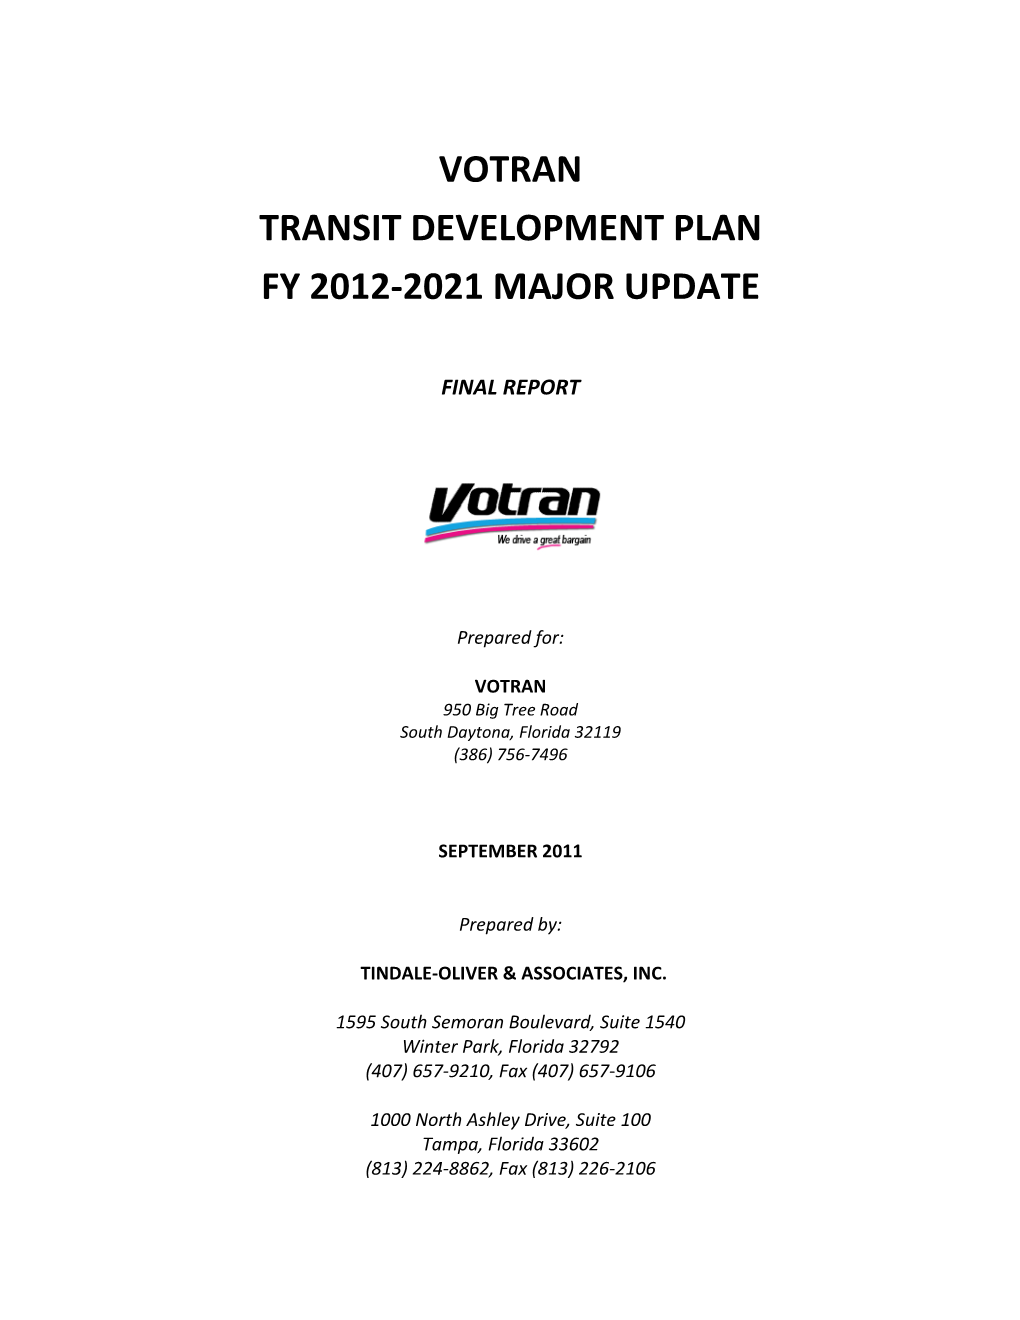 Transit Development Plan FY 2012-2021 Major Update